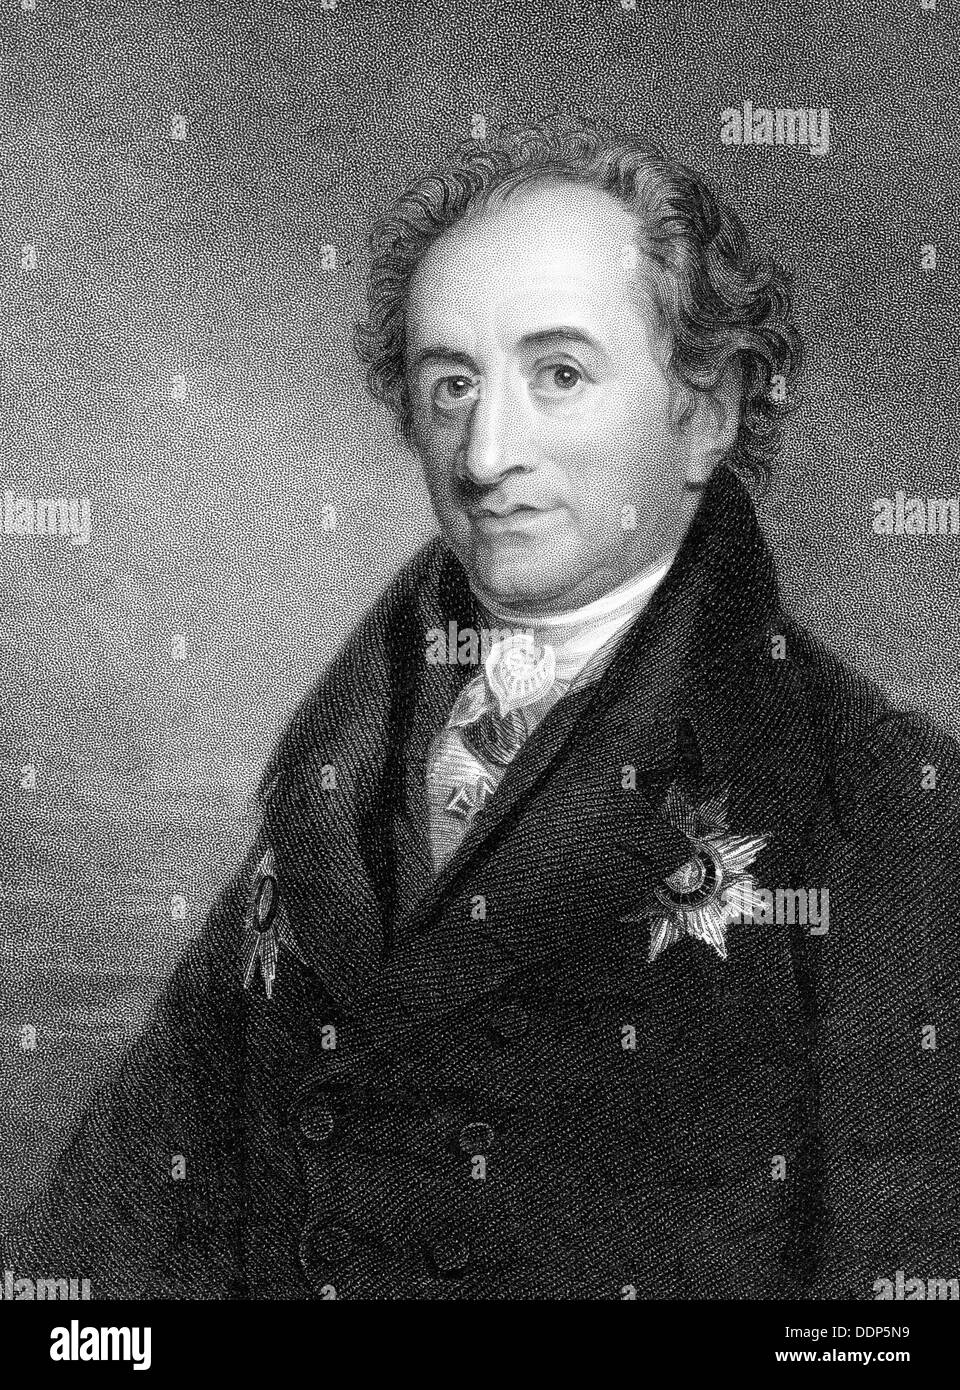 Johann Wolfgang von Goethe - 1832 - engraving Stock Photo